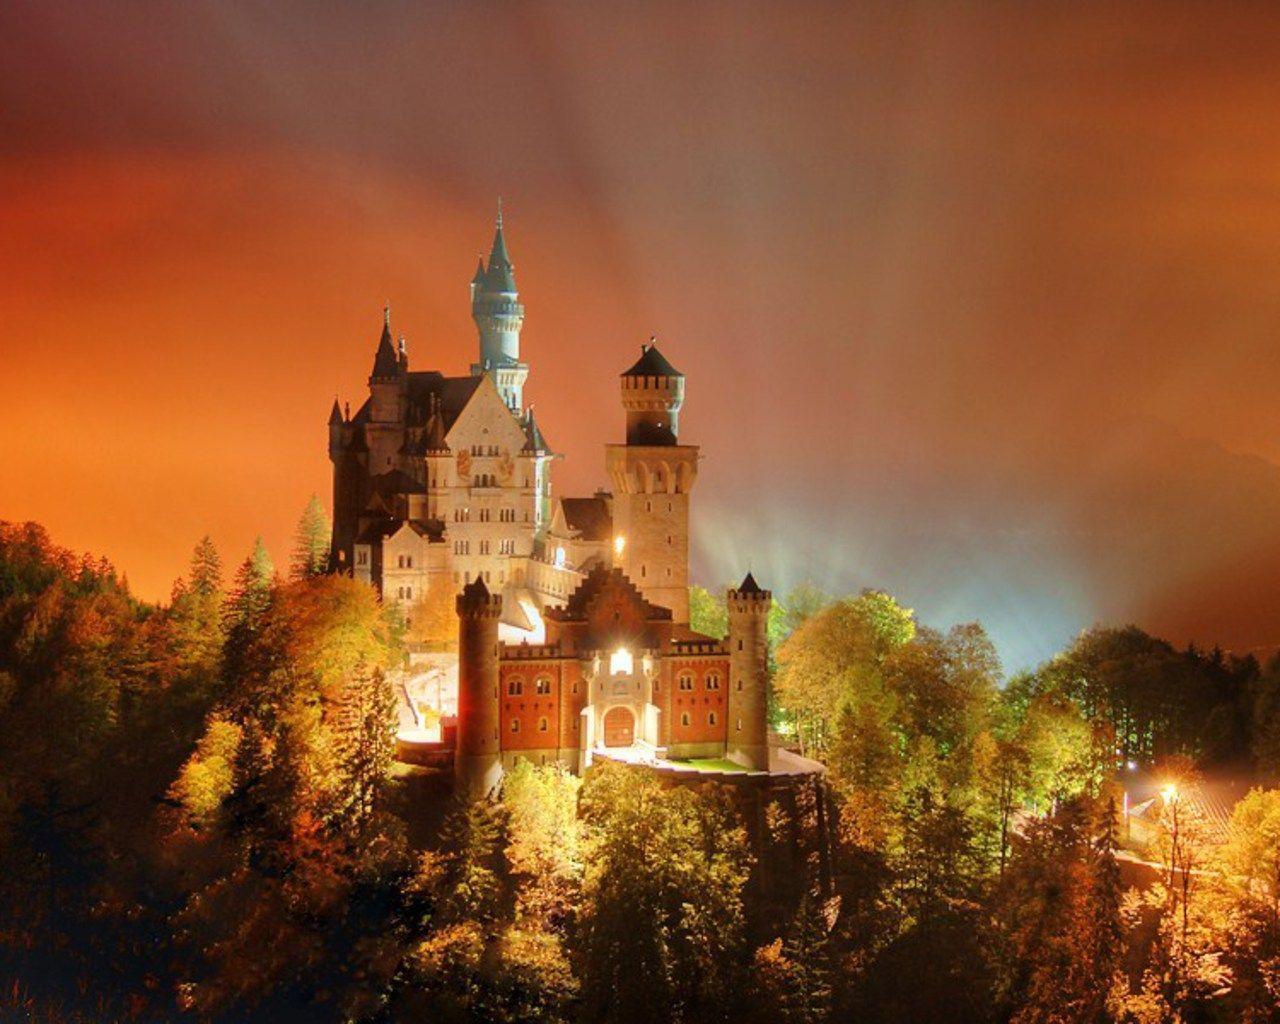 Neuschwanstein Castle. The mysteries of the world